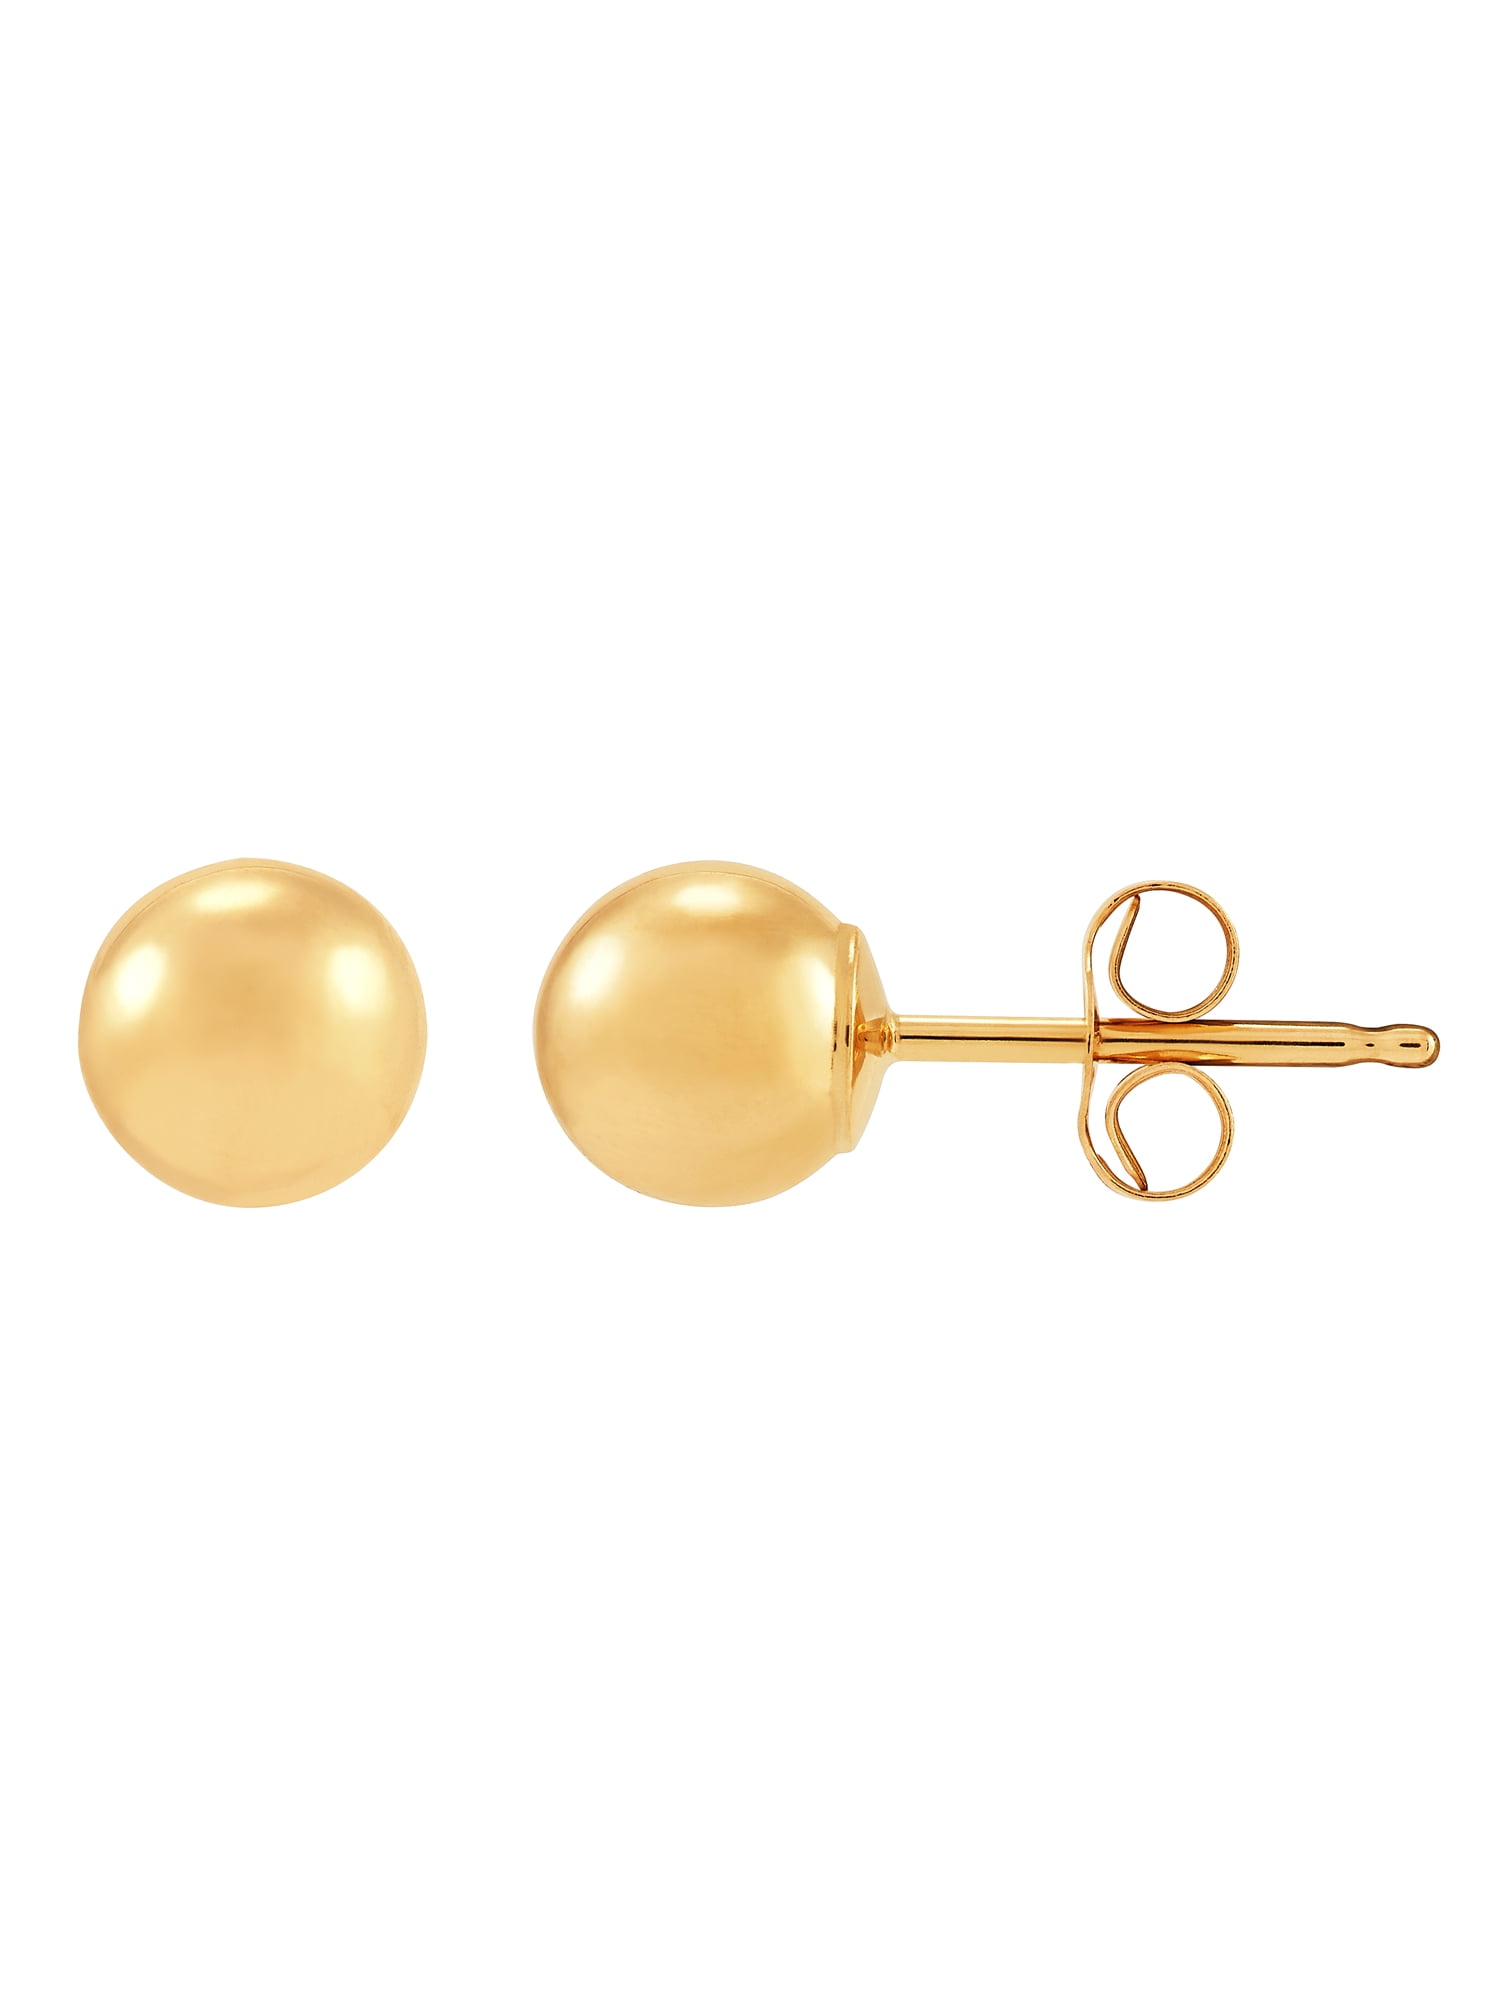 10K Yellow Gold Secure Screw Back Stud Earrings 5mm Ball Children's Jewelry 